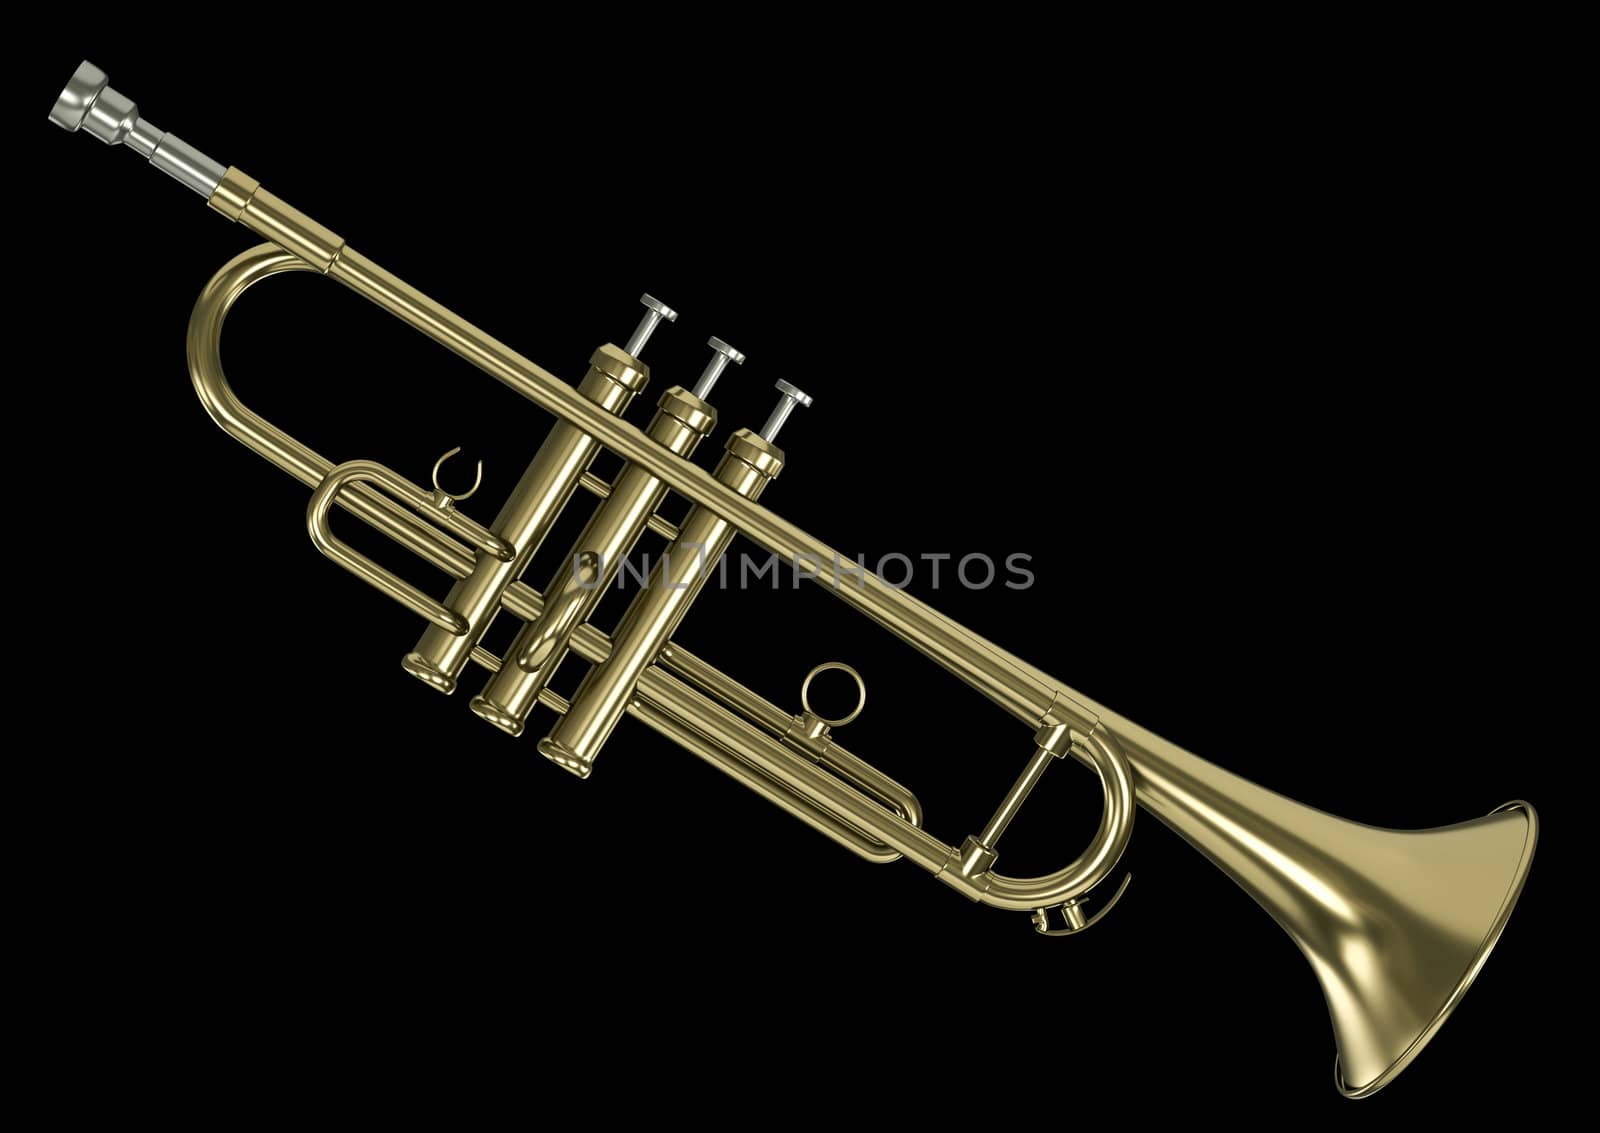 Trumpet against a black background. 3D rendered image.